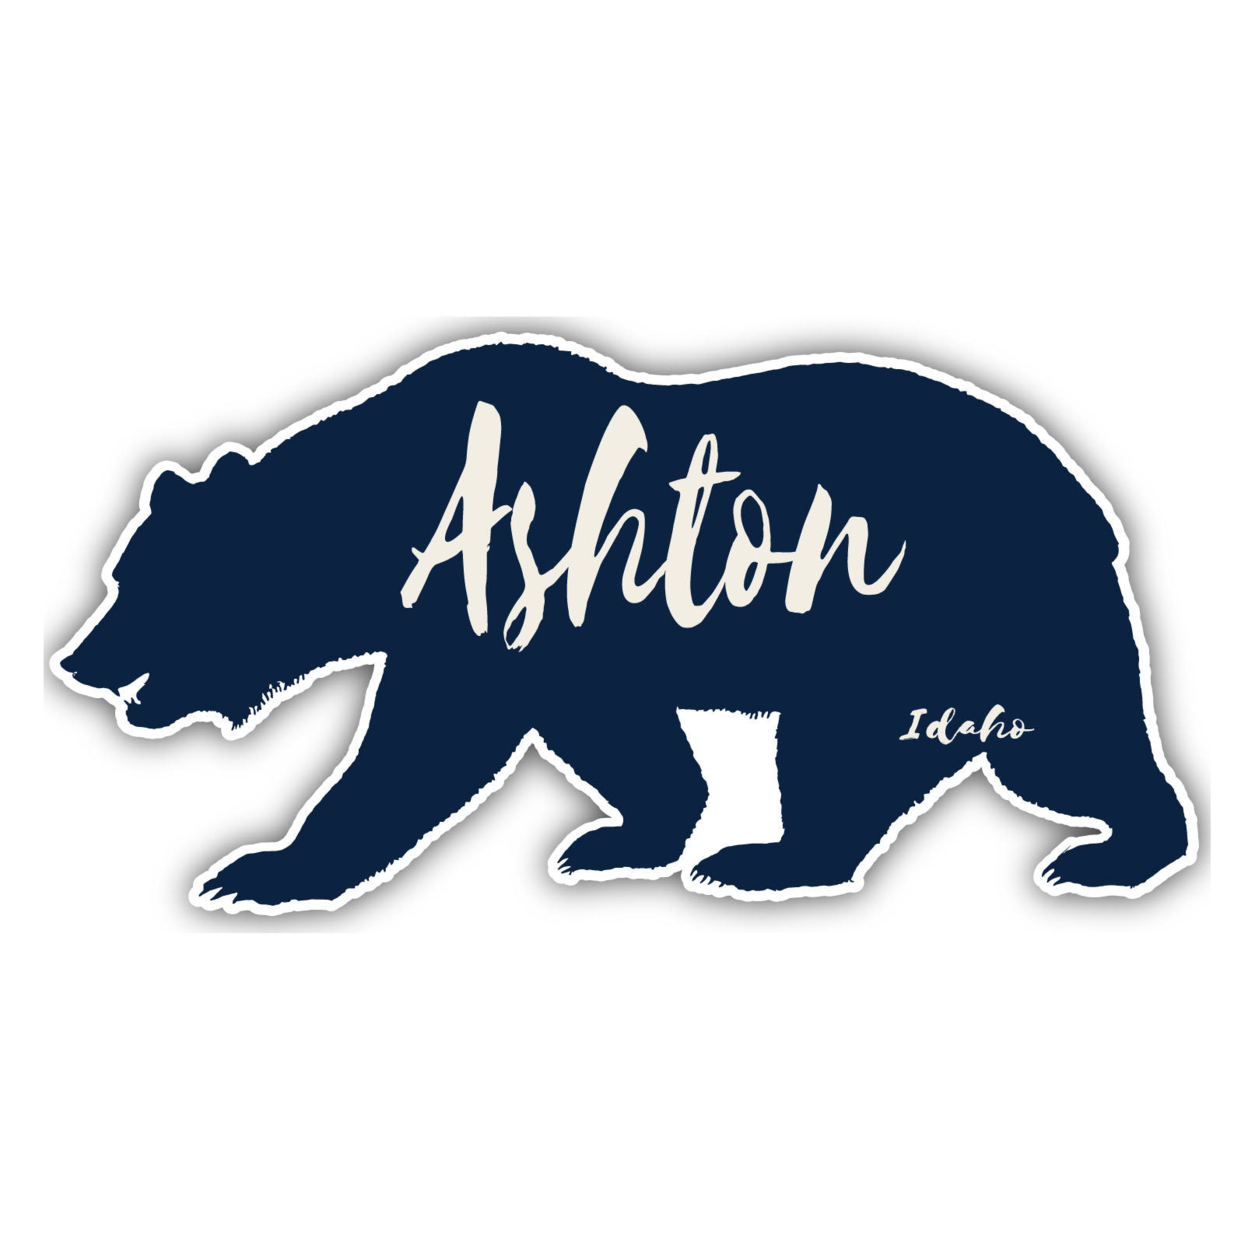 Ashton Idaho Souvenir Decorative Stickers (Choose Theme And Size) - 4-Pack, 8-Inch, Bear